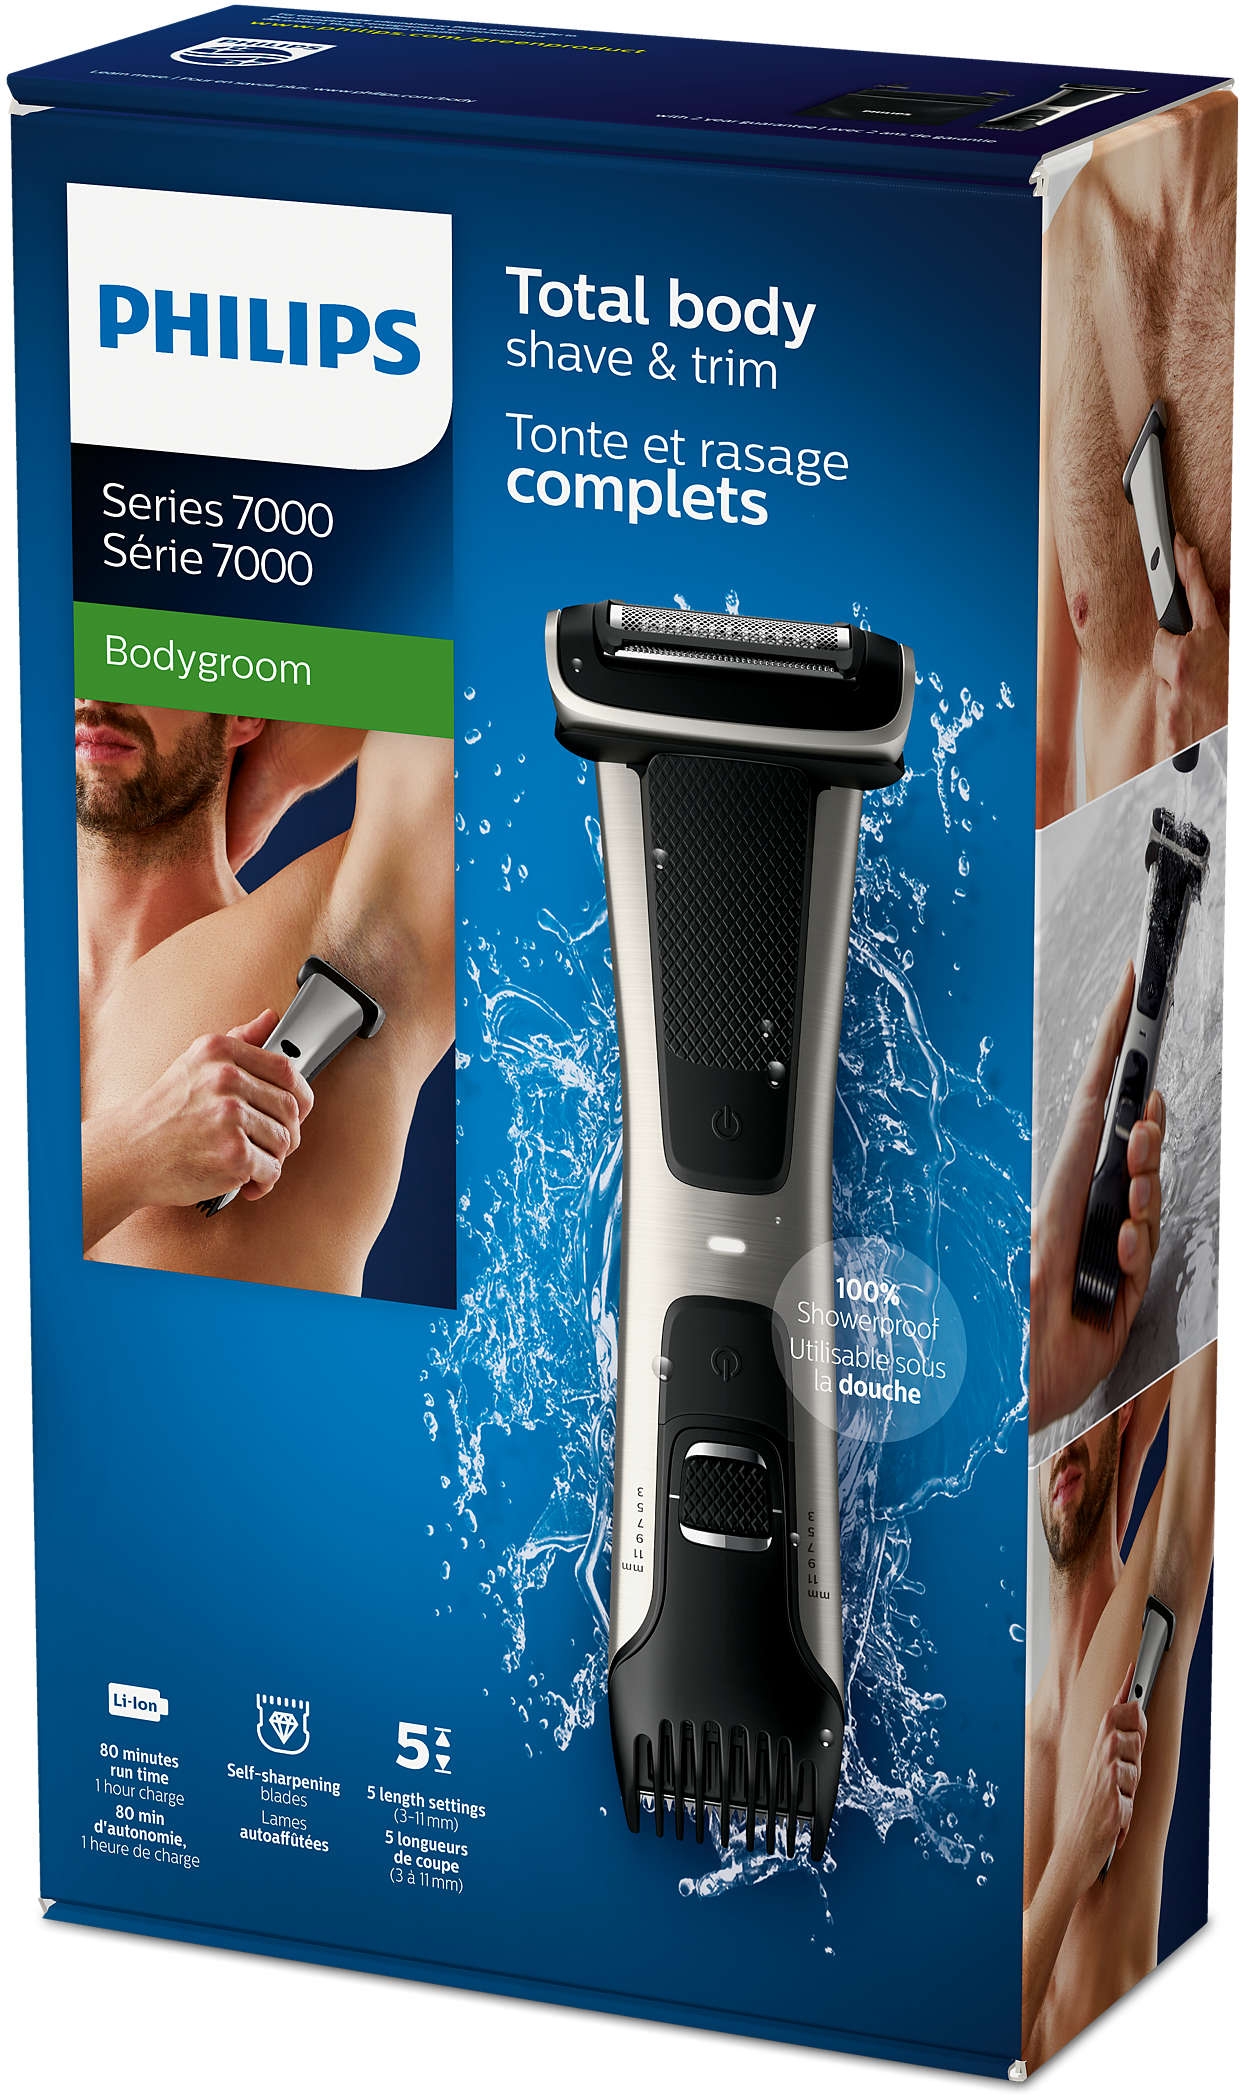 Bodygroom 7000 シャワー対応ボディーグルーマー BG7025/15 | Philips